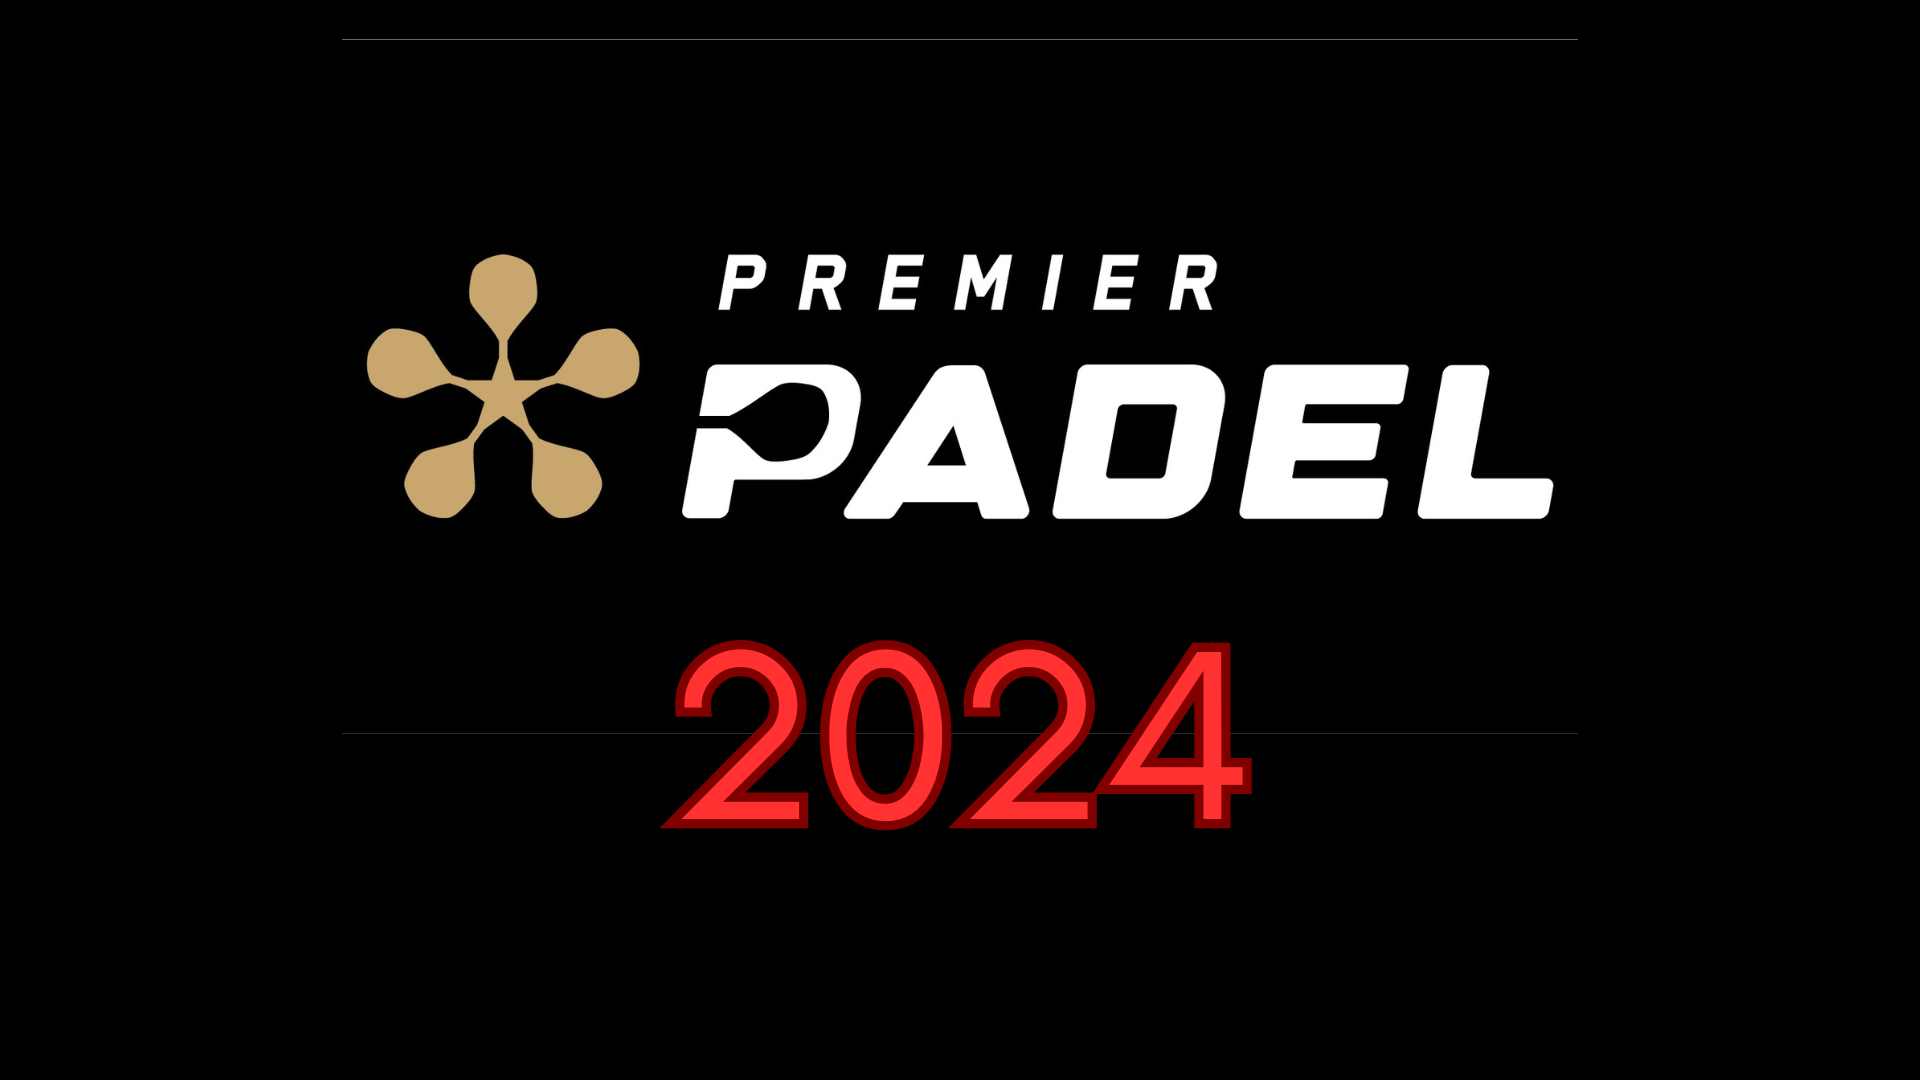 Premier Padel 2024 siirtoikkunan logo